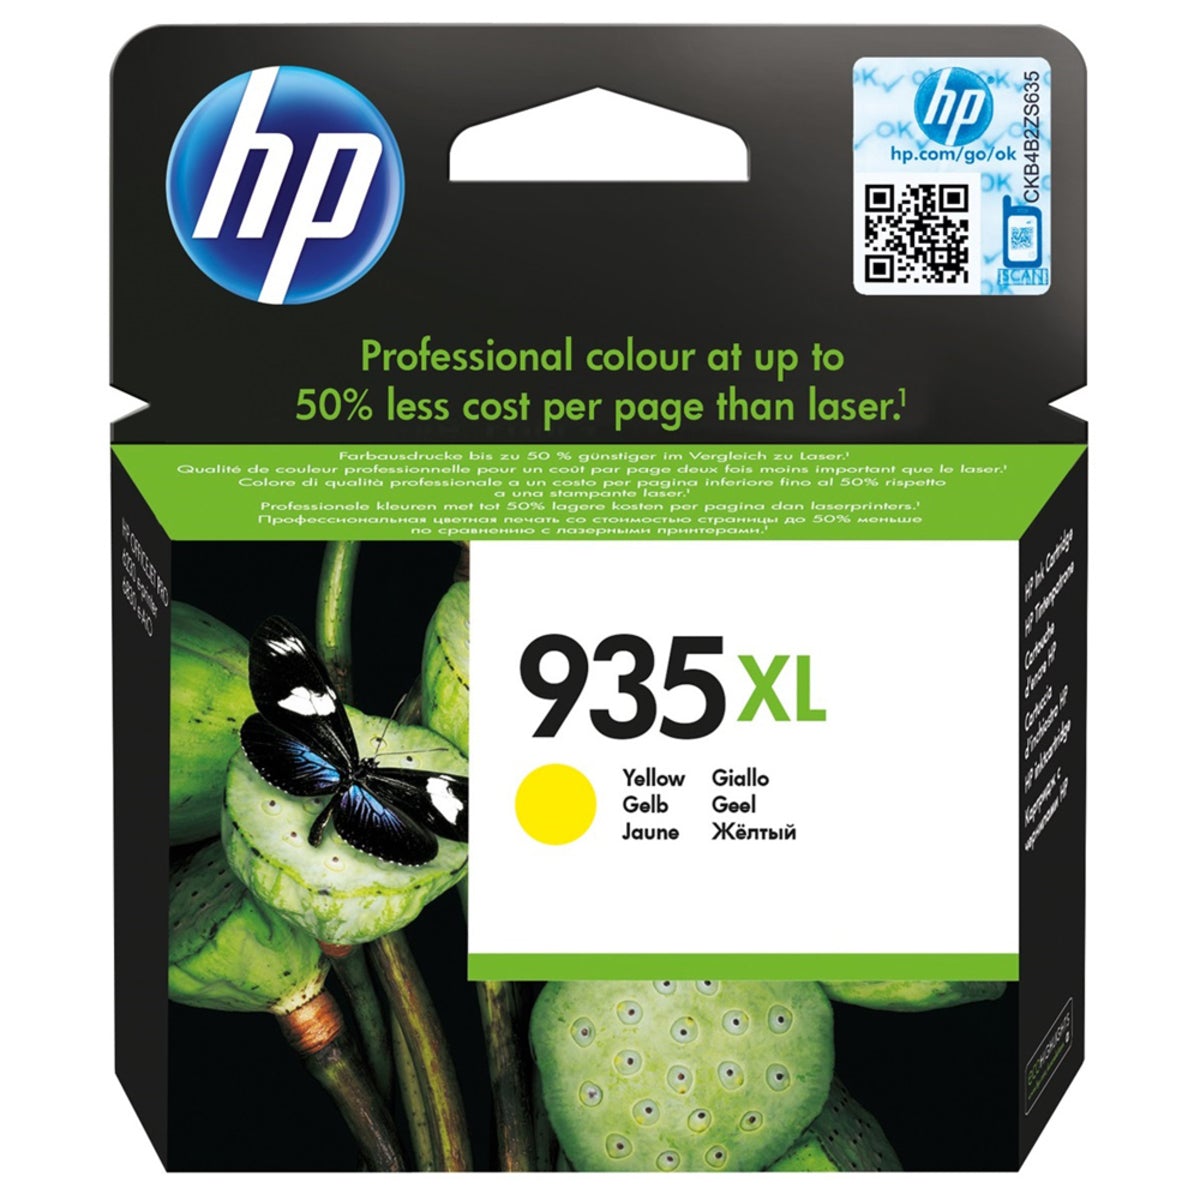 HP 934XL Ink Cartridge for HP Officjet Pro 6830 6230